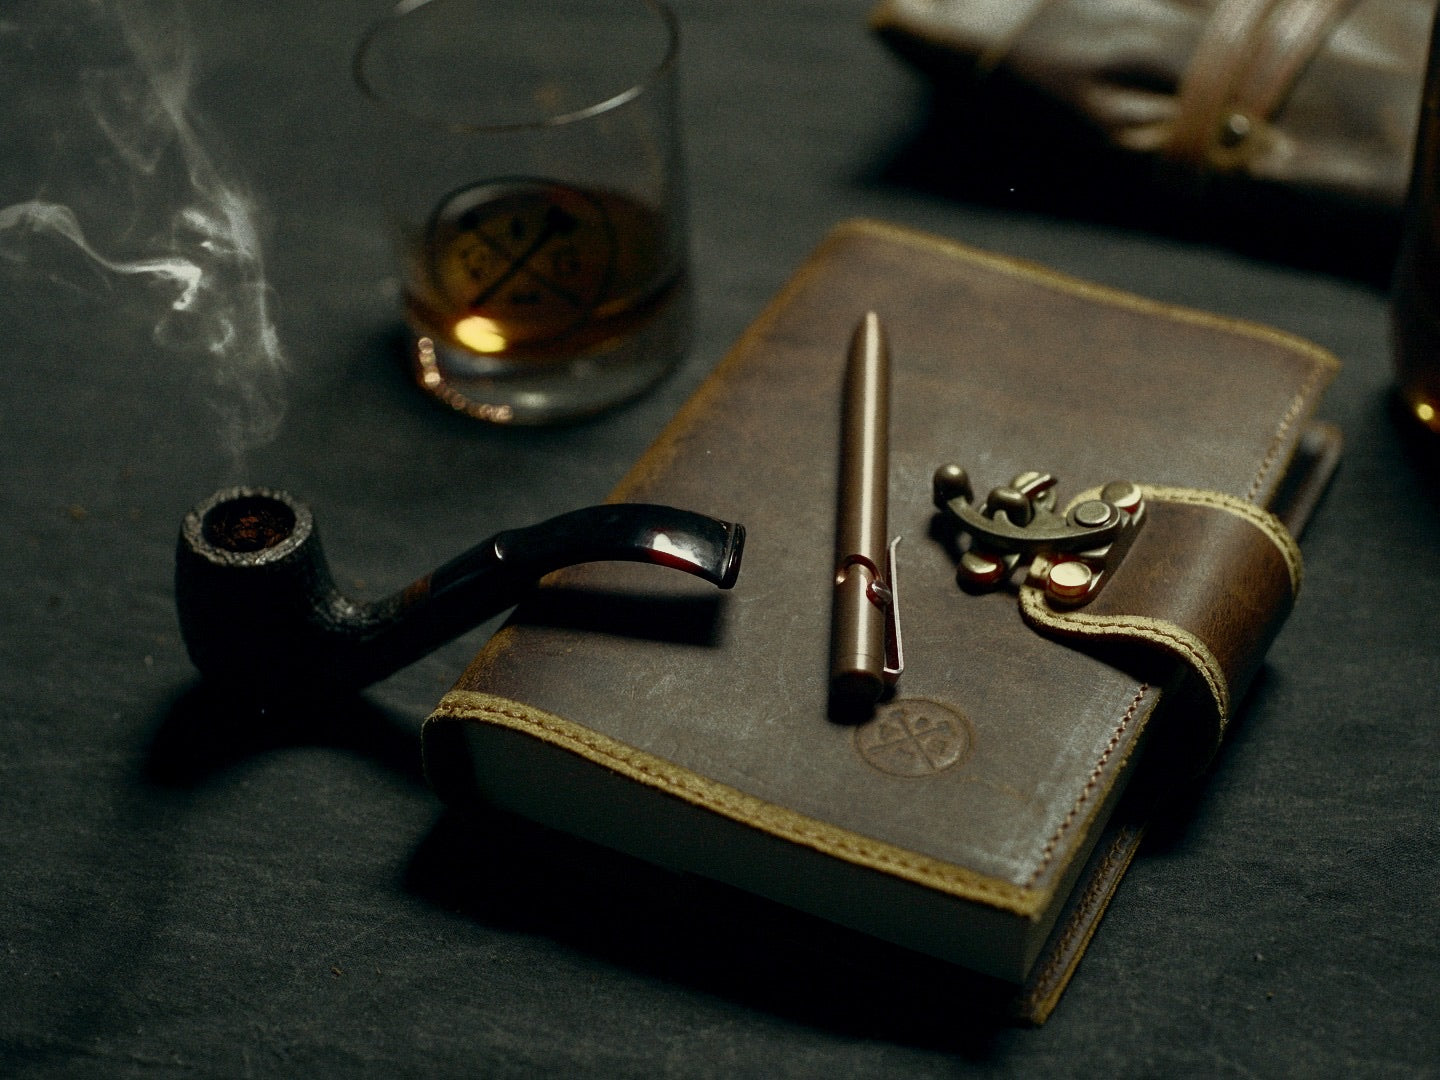 The “Tolkien” Leather Journal by Vintage Gentlemen